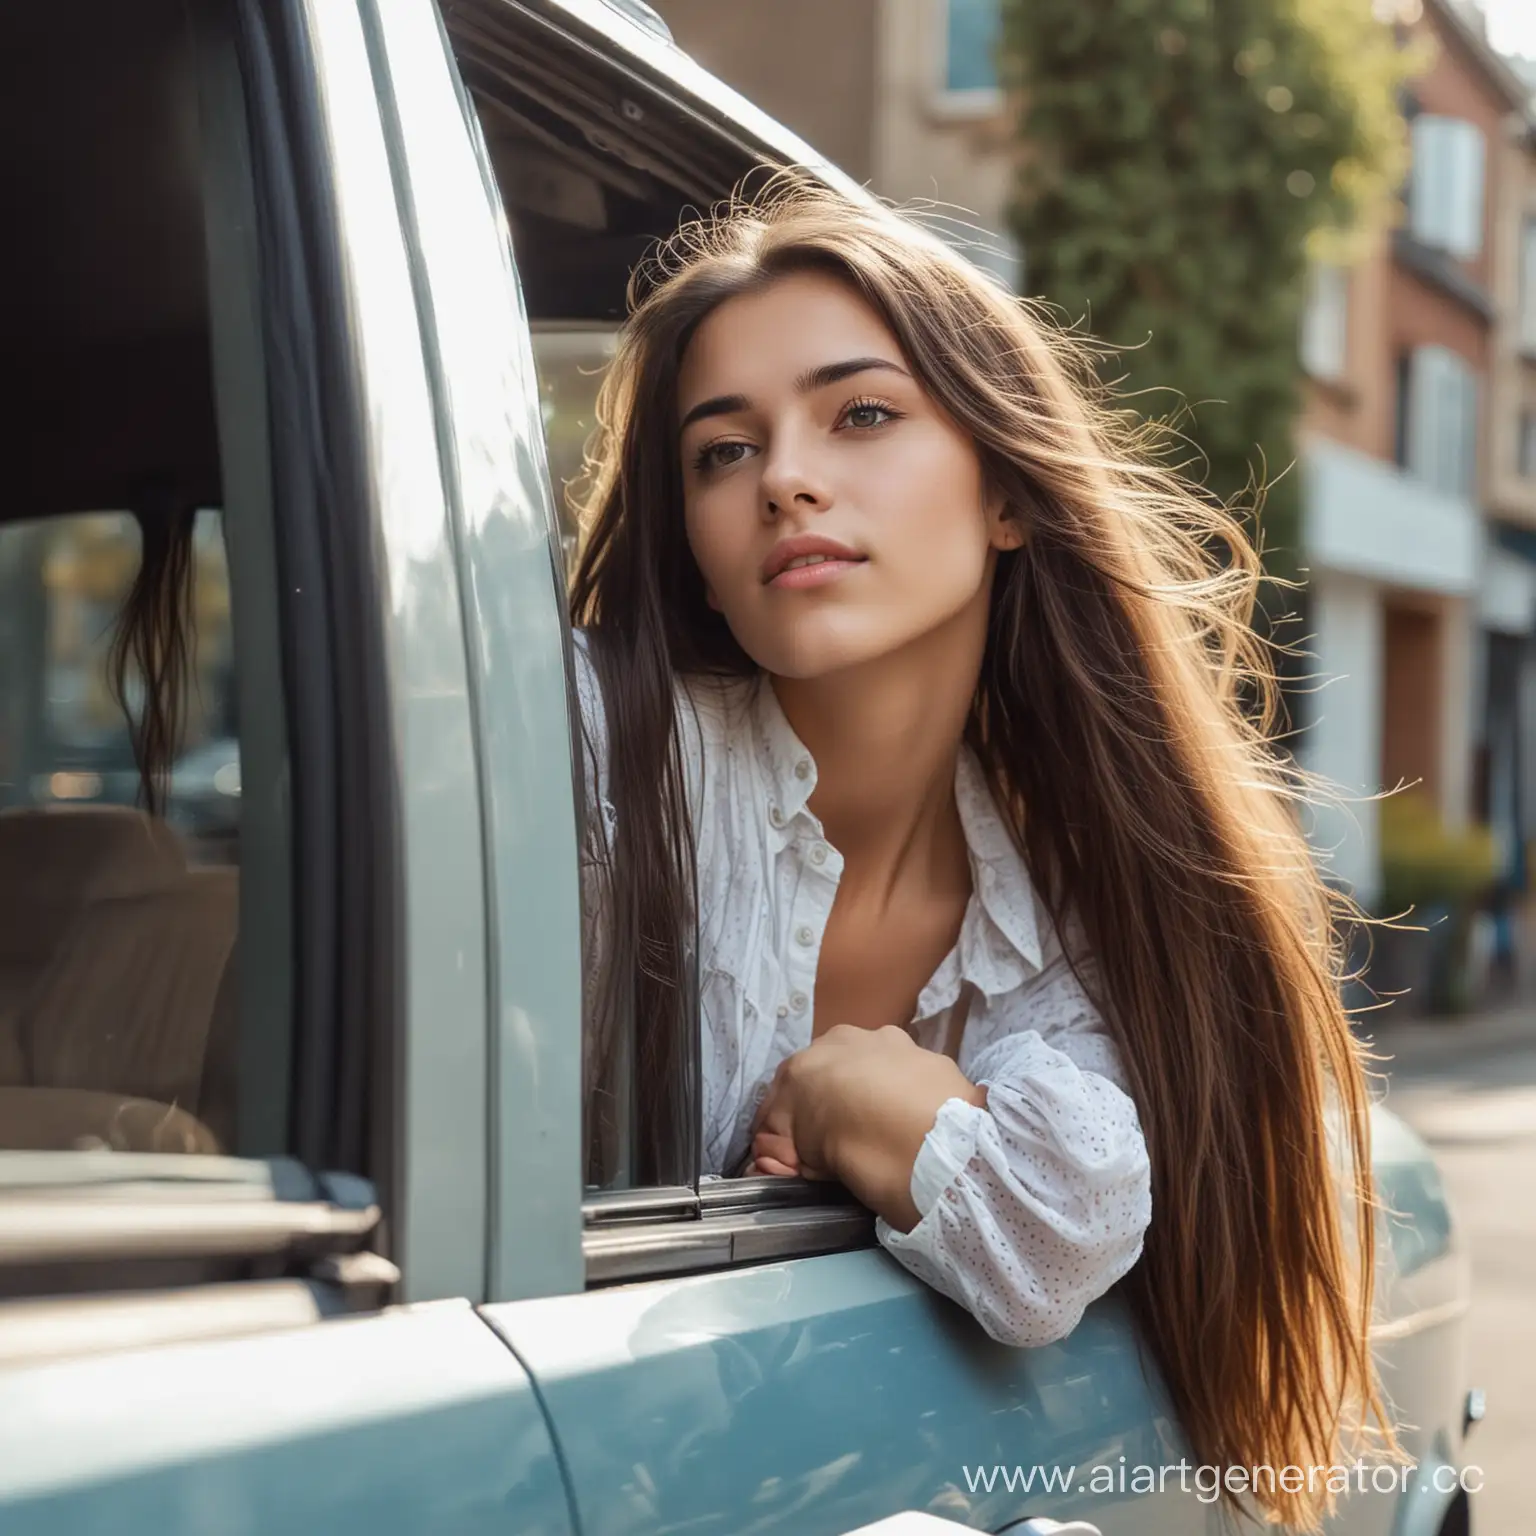 Girl-with-Long-Hair-Looking-Sideways-by-an-Open-Car-Window